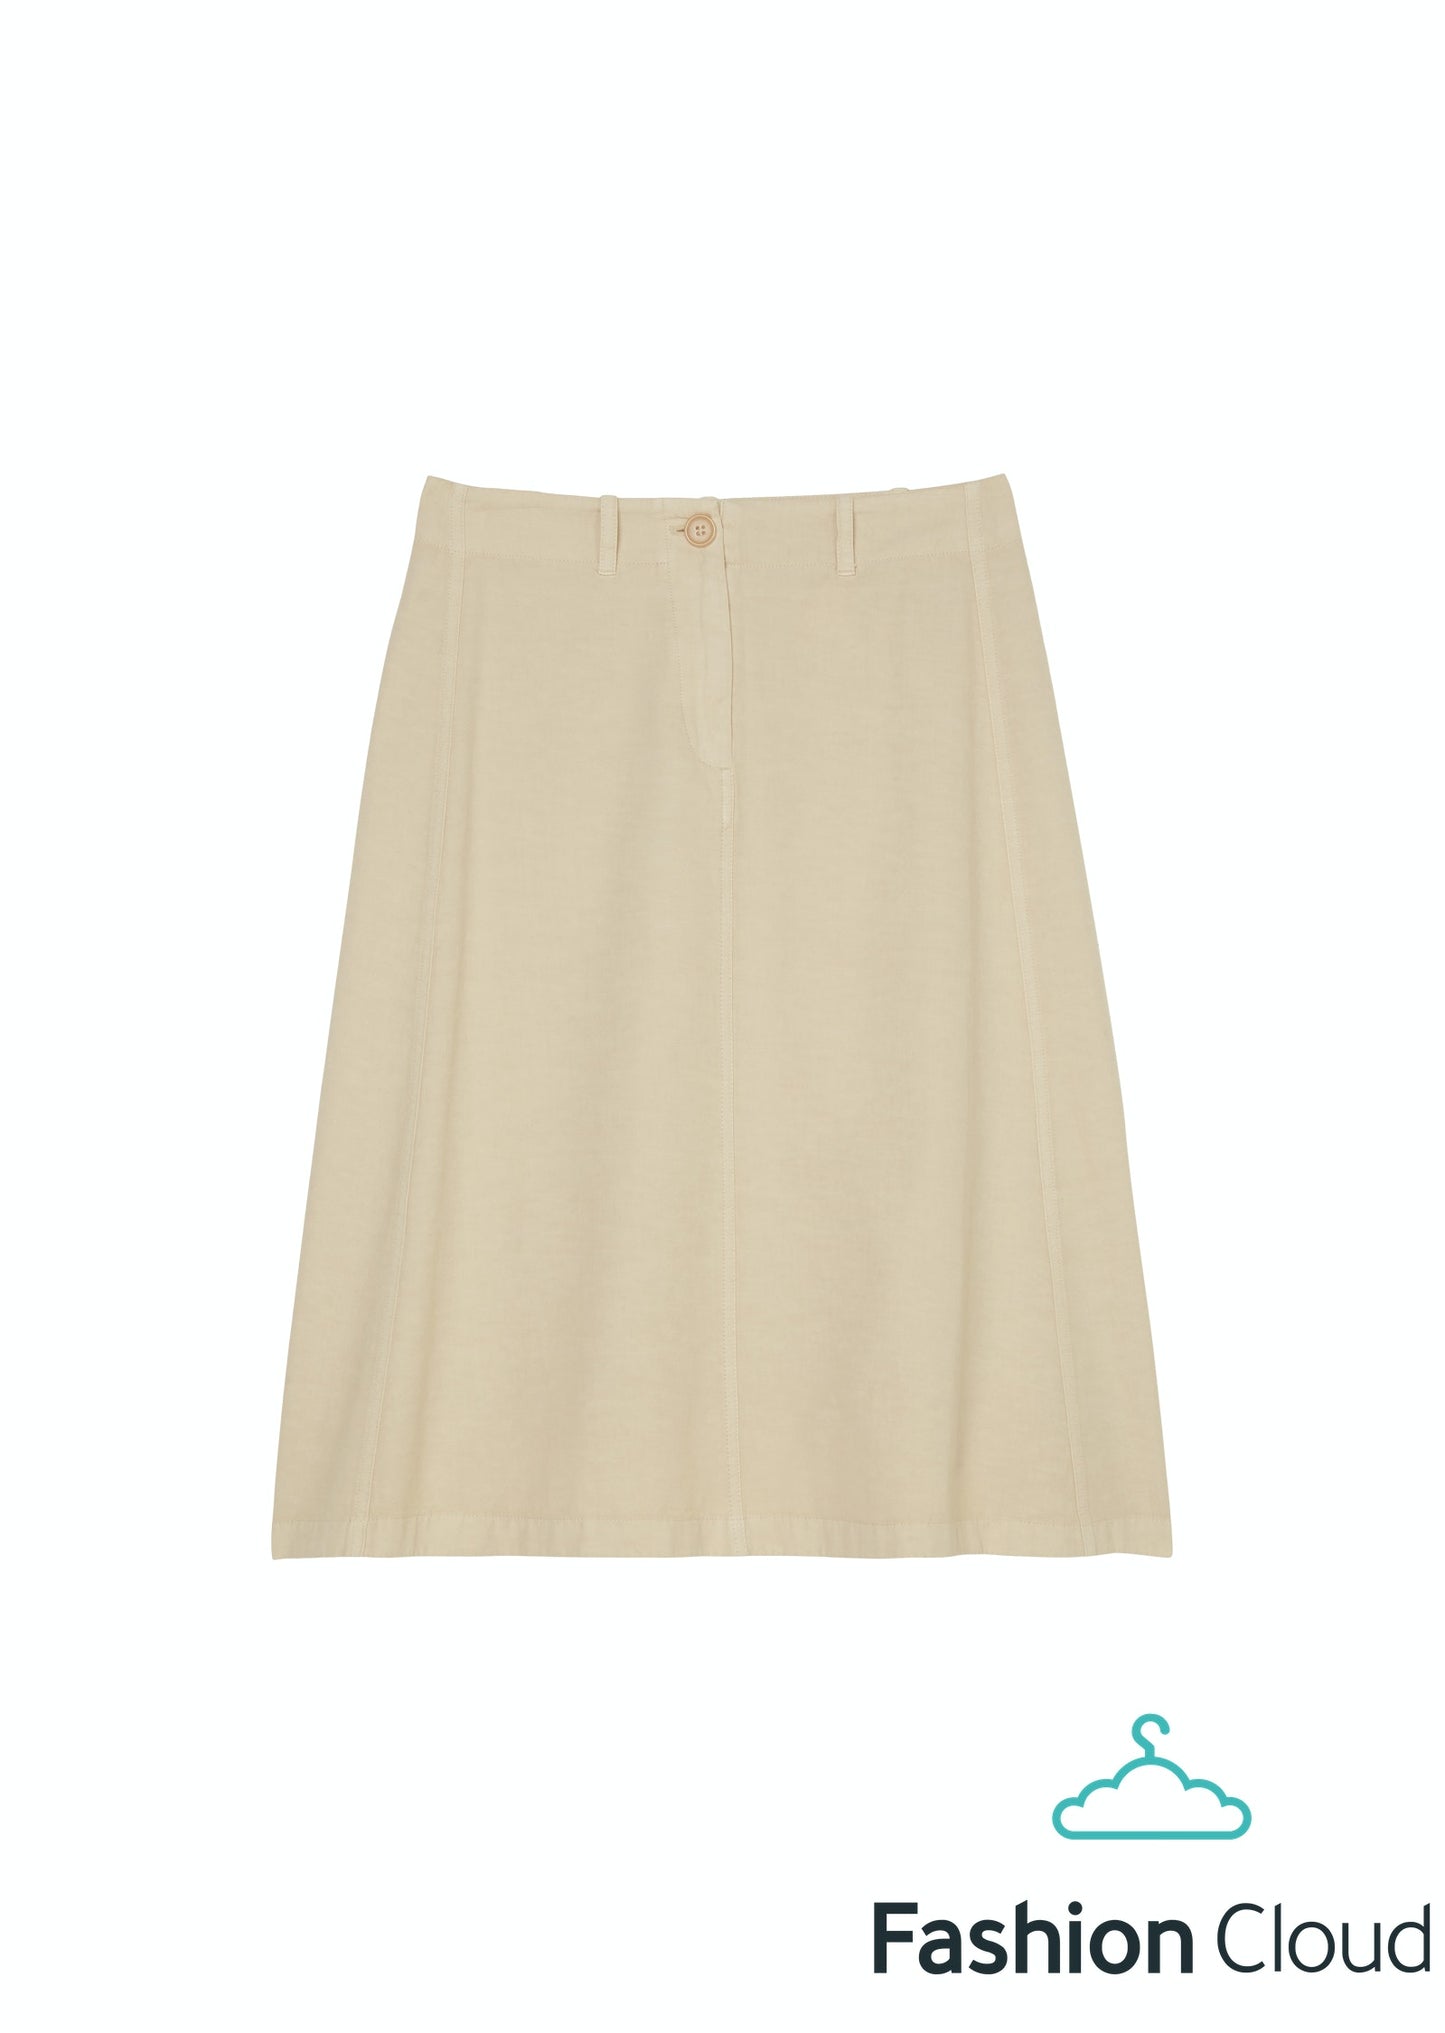 Skirt, high waisted, a-line, knee l - 403134020199